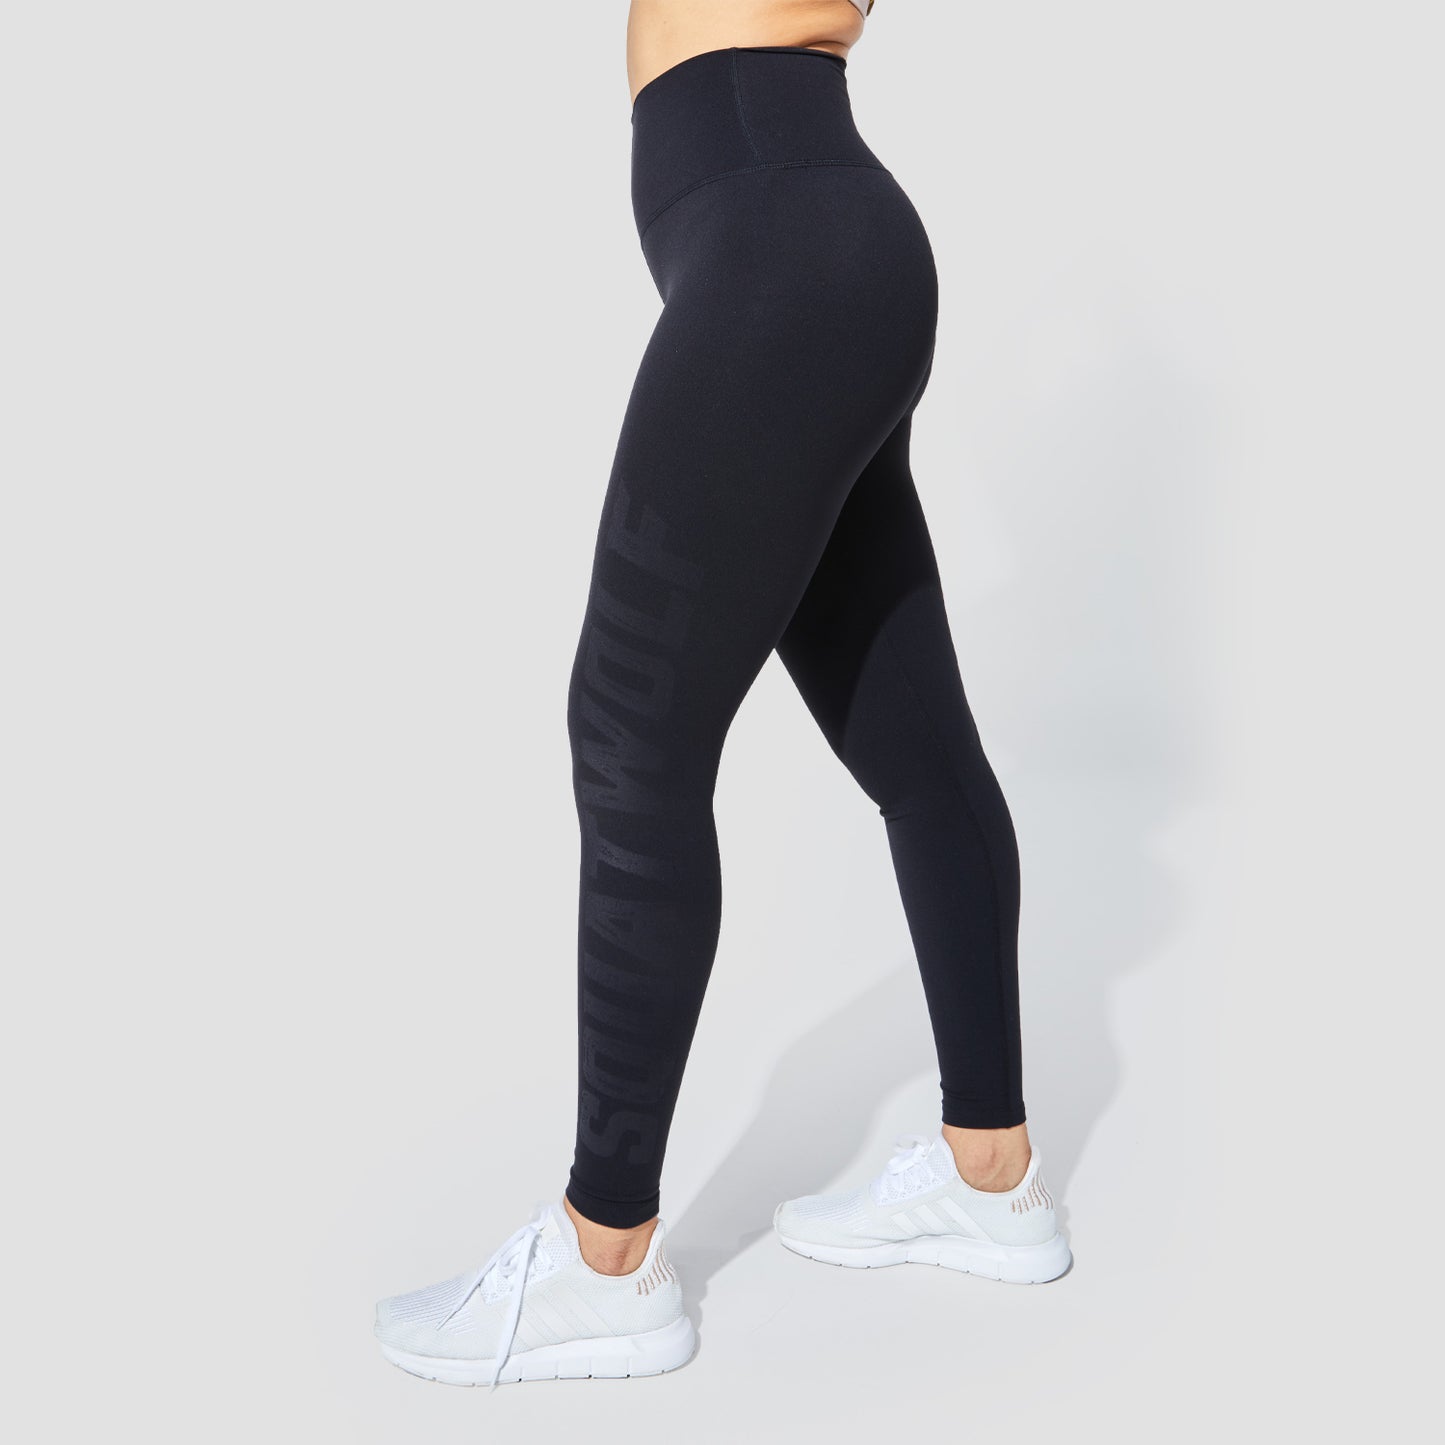 squatwolf-workout-clothes-graphic-wordmark-leggins-black-gym-leggings-for-women